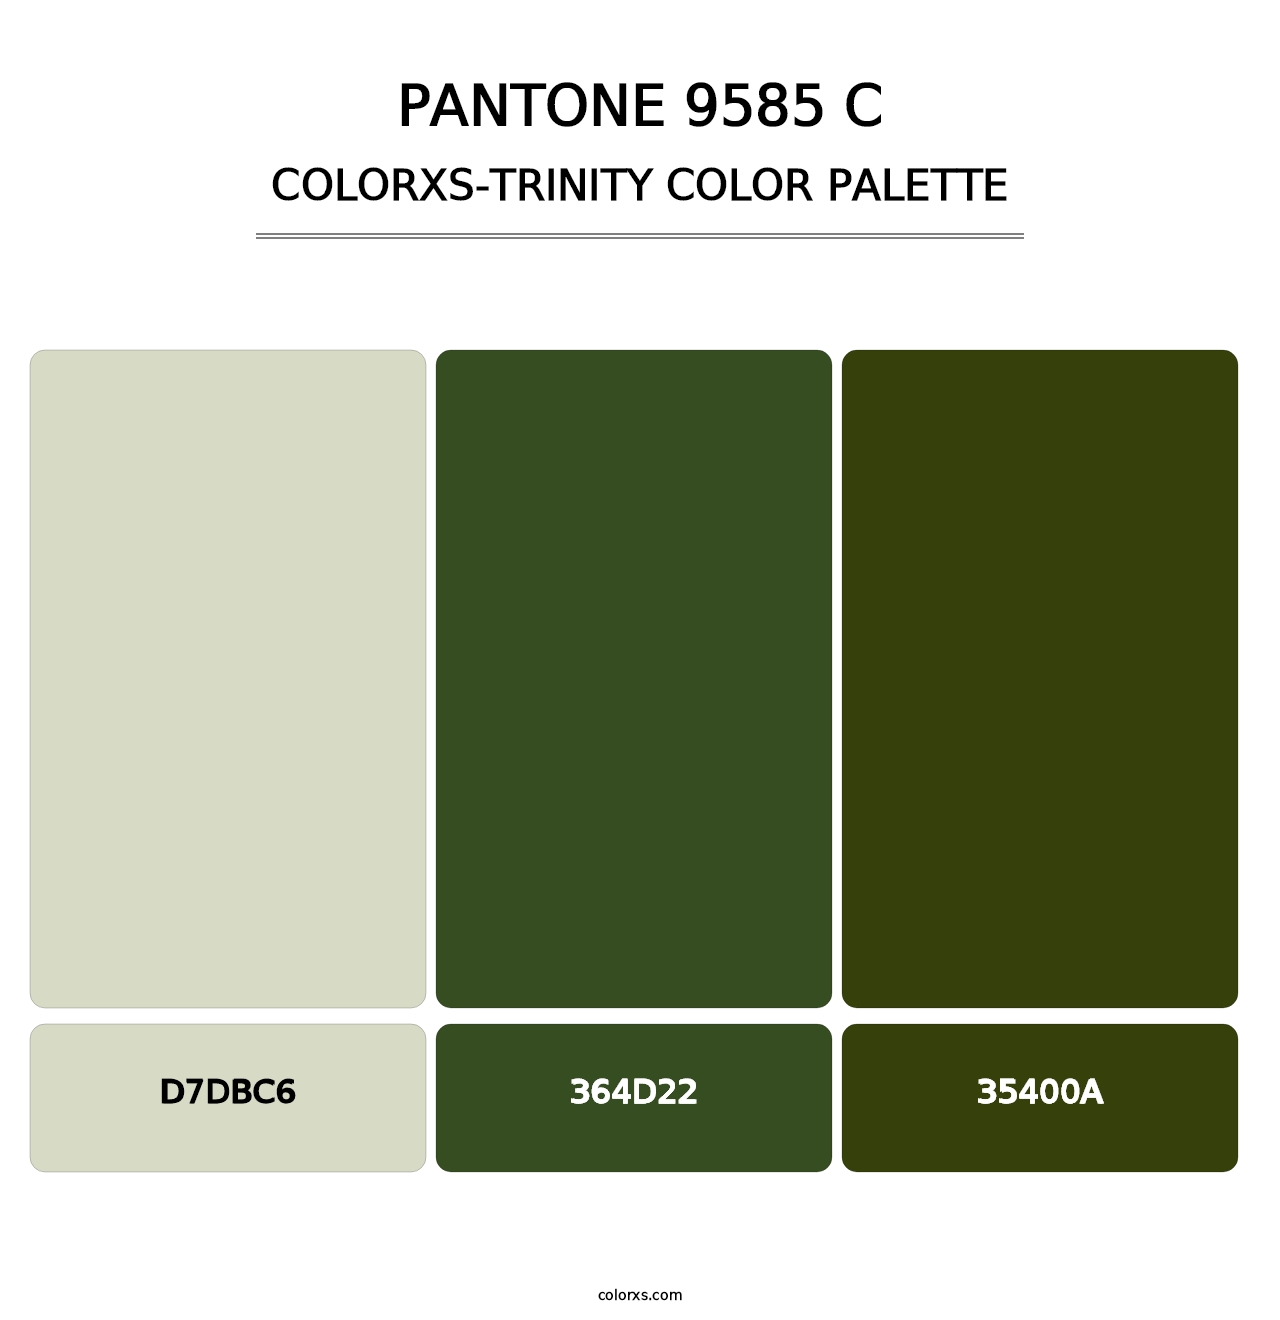 PANTONE 9585 C - Colorxs Trinity Palette